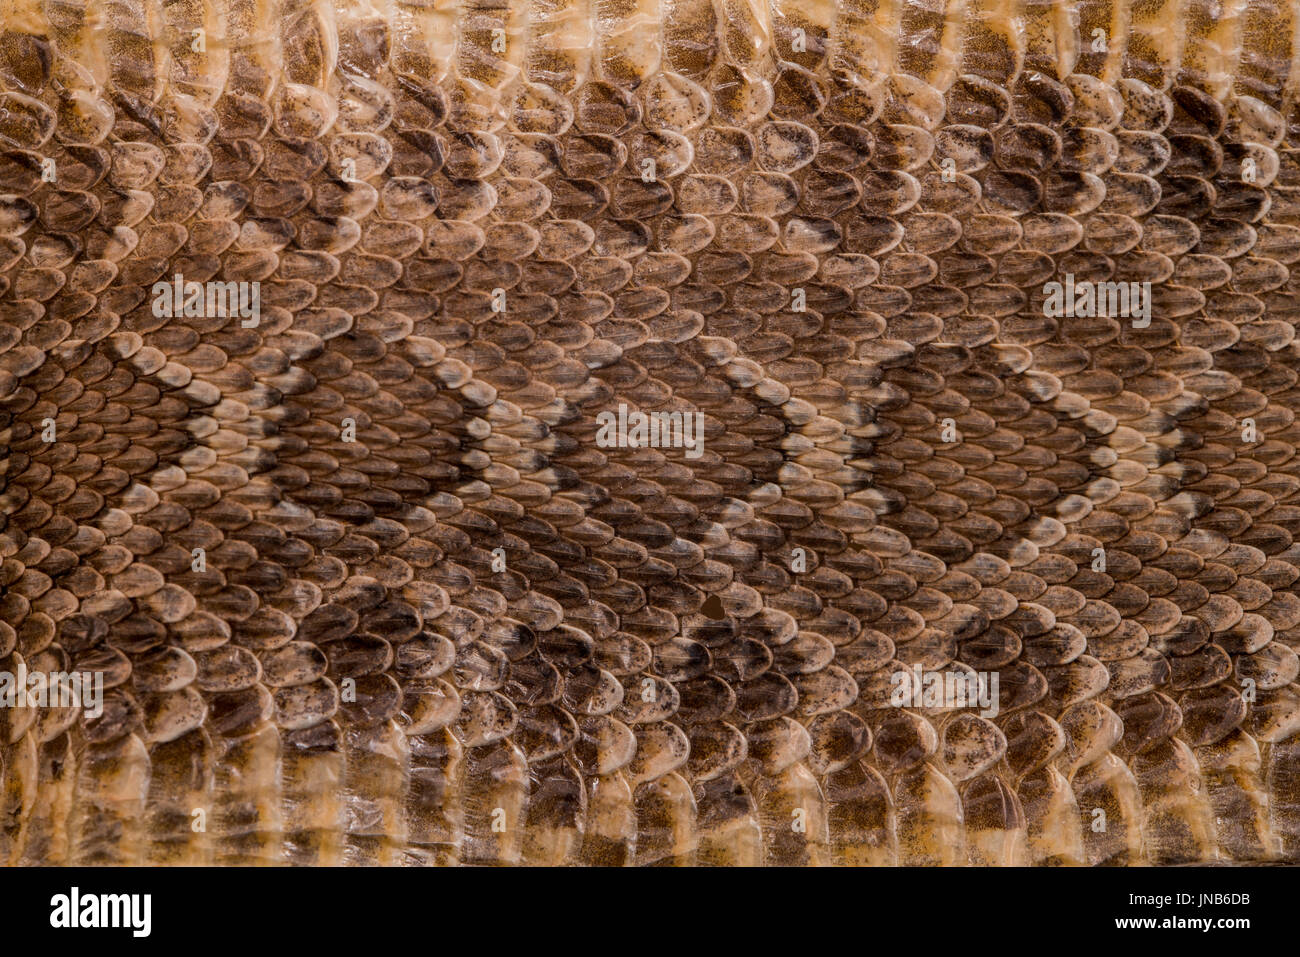 Rattlesnake Skin Stock Photos & Rattlesnake Skin Stock Images - Alamy